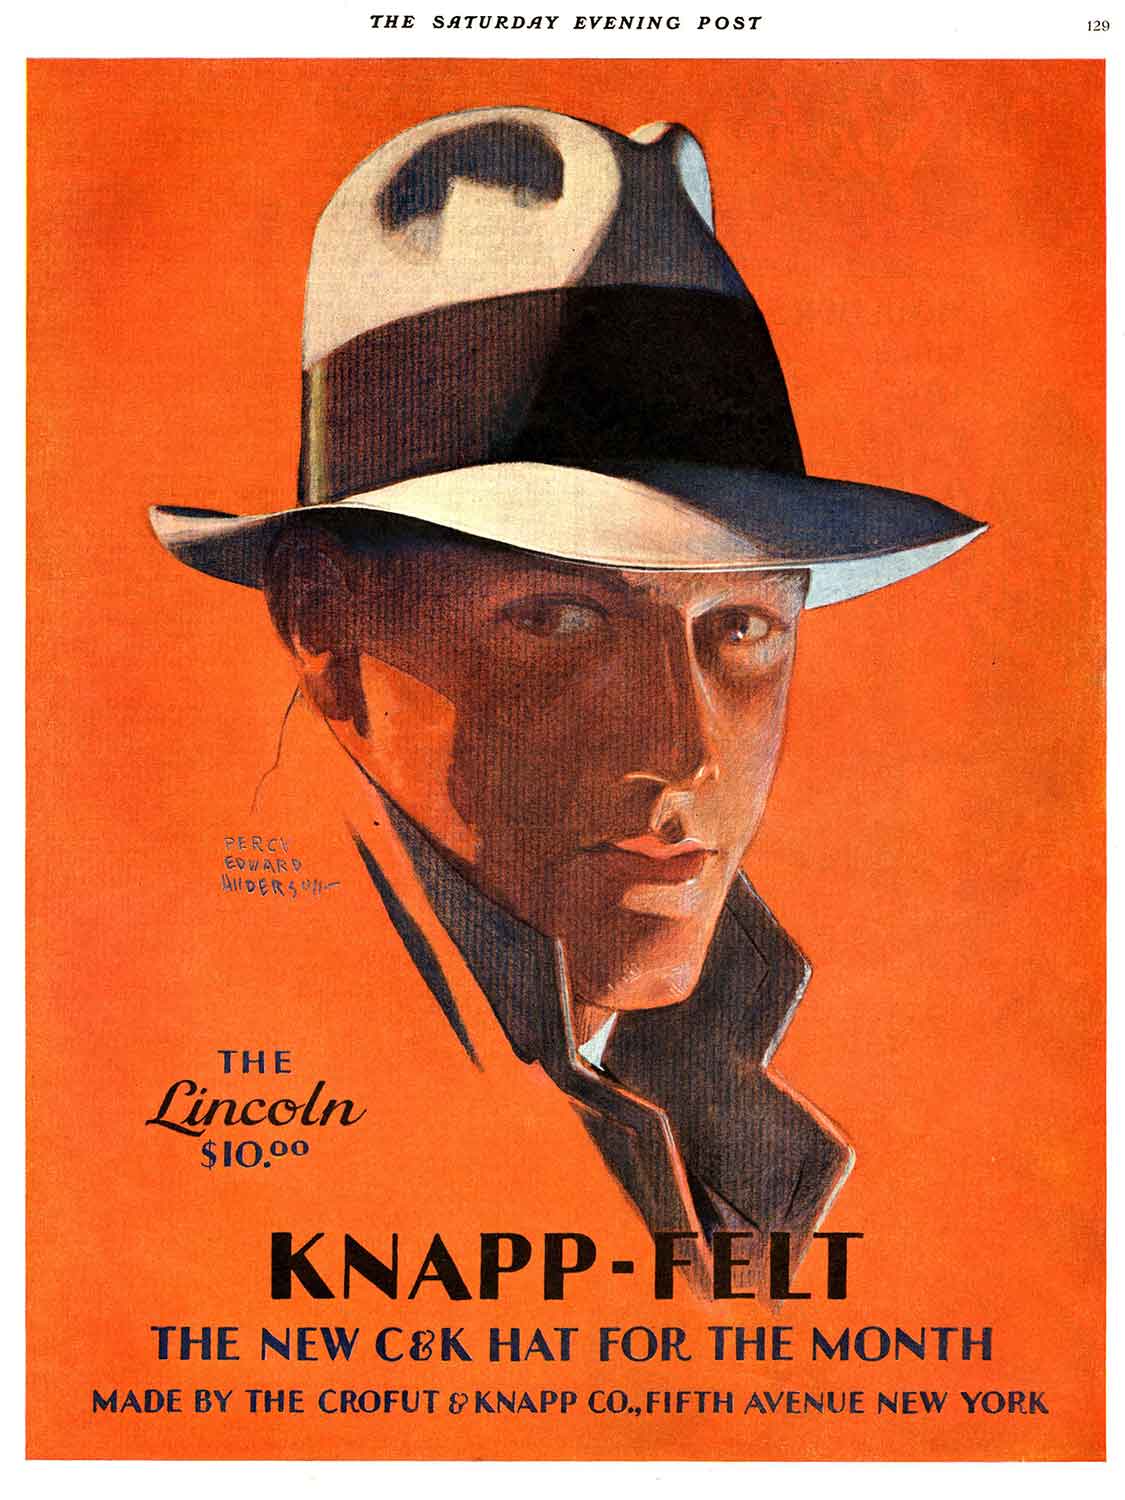 An advertisement for knapp felt hats in the 1920s